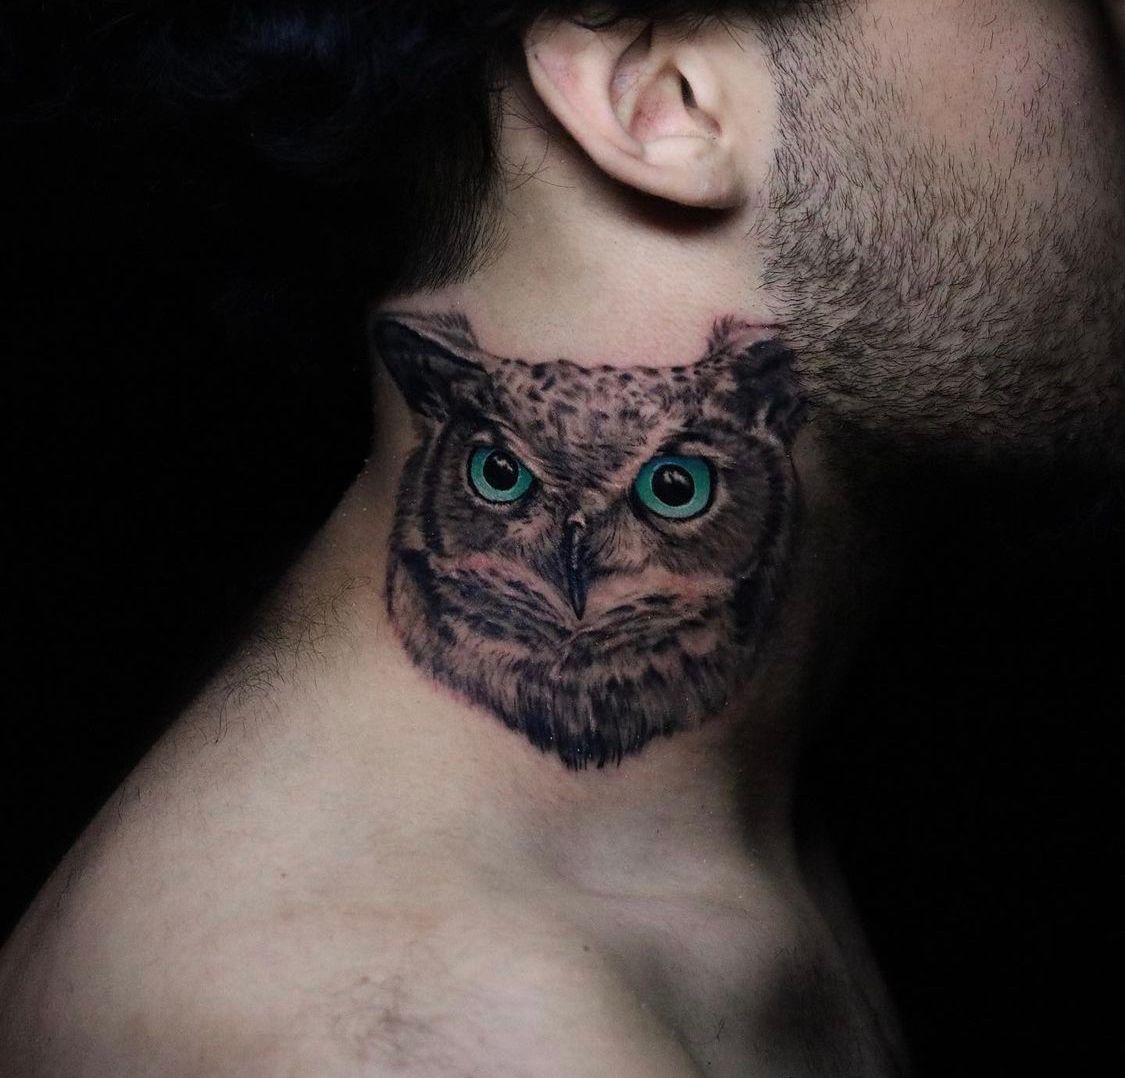 Pricked Tattoos - ~Lil Owl Family~ ... By Janaye! ... @tuckerxtattoos ...  🦉🦉🦉🦉🦉🦉 | Facebook